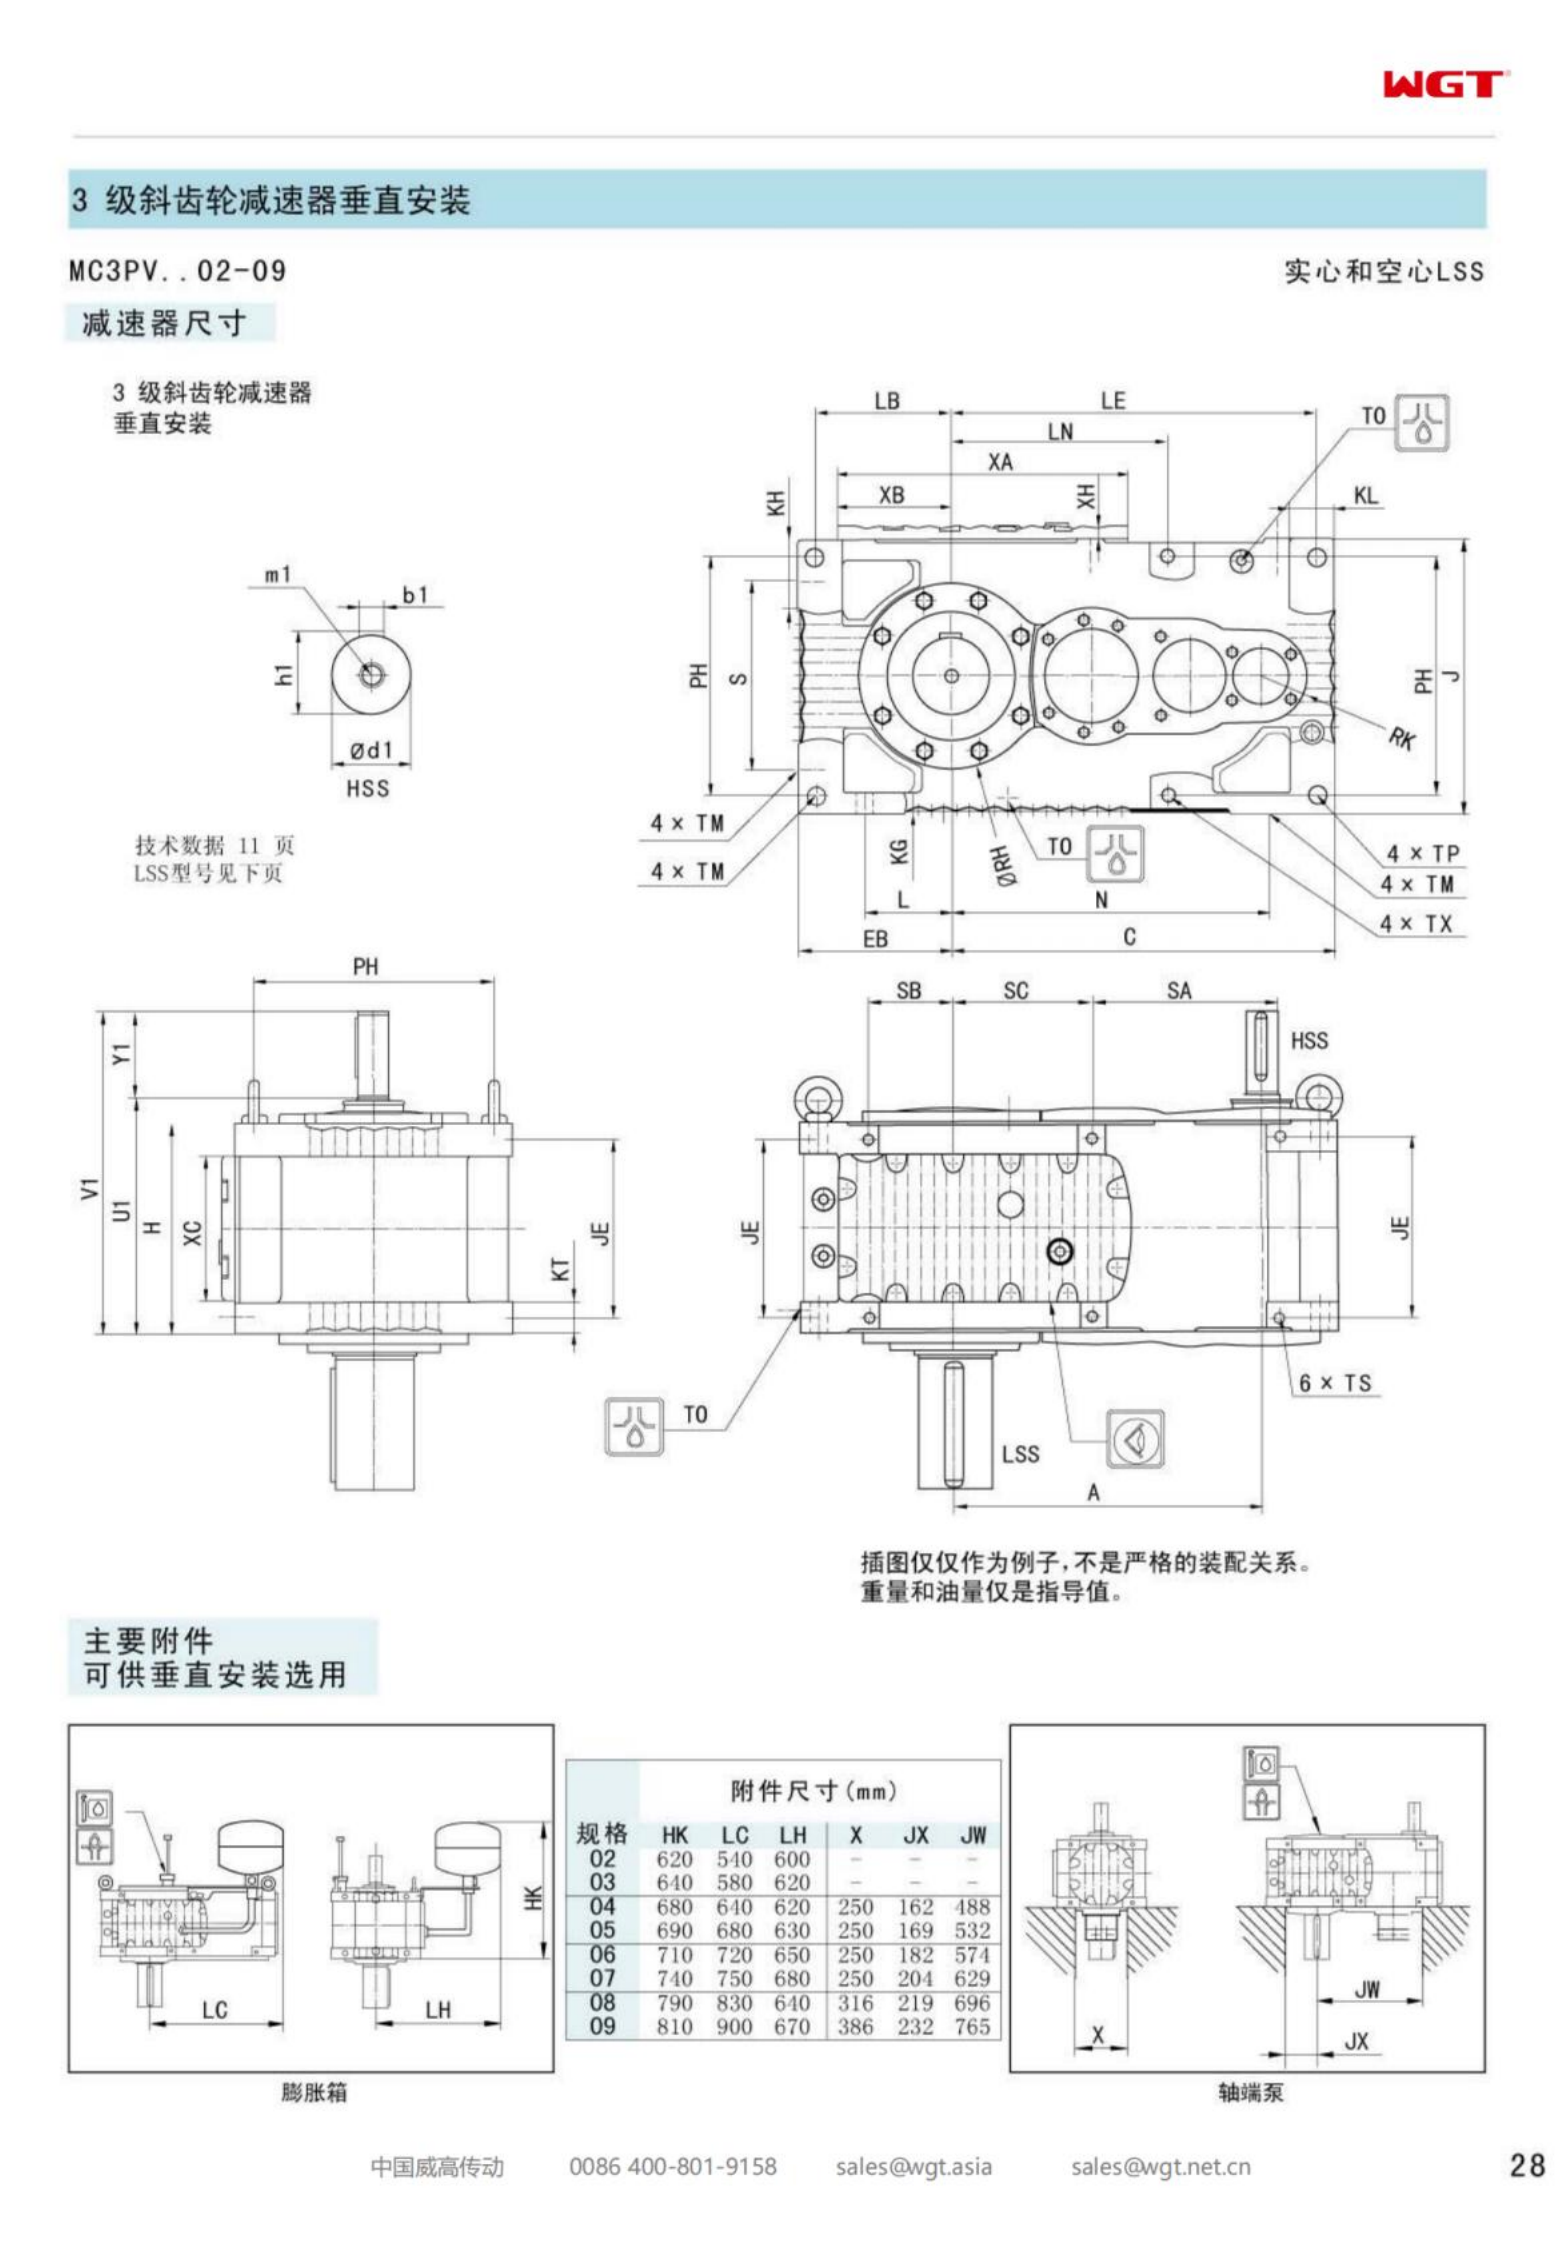 MC3PVST06 replaces _SEW_MC_Series gearbox (patent)